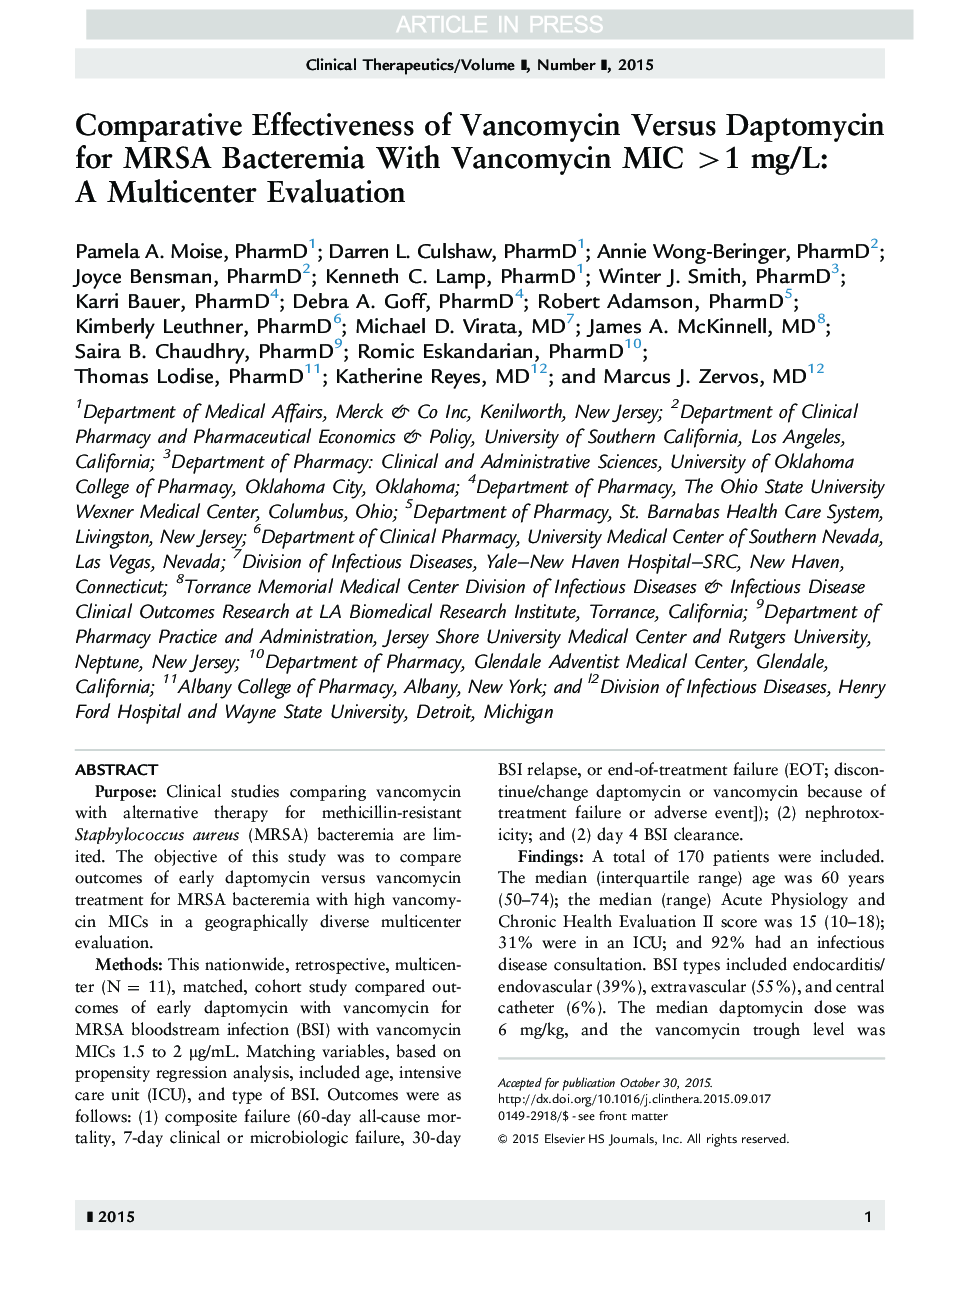 Comparative Effectiveness of Vancomycin Versus Daptomycin for MRSA Bacteremia With Vancomycin MIC >1 mg/L: A Multicenter Evaluation